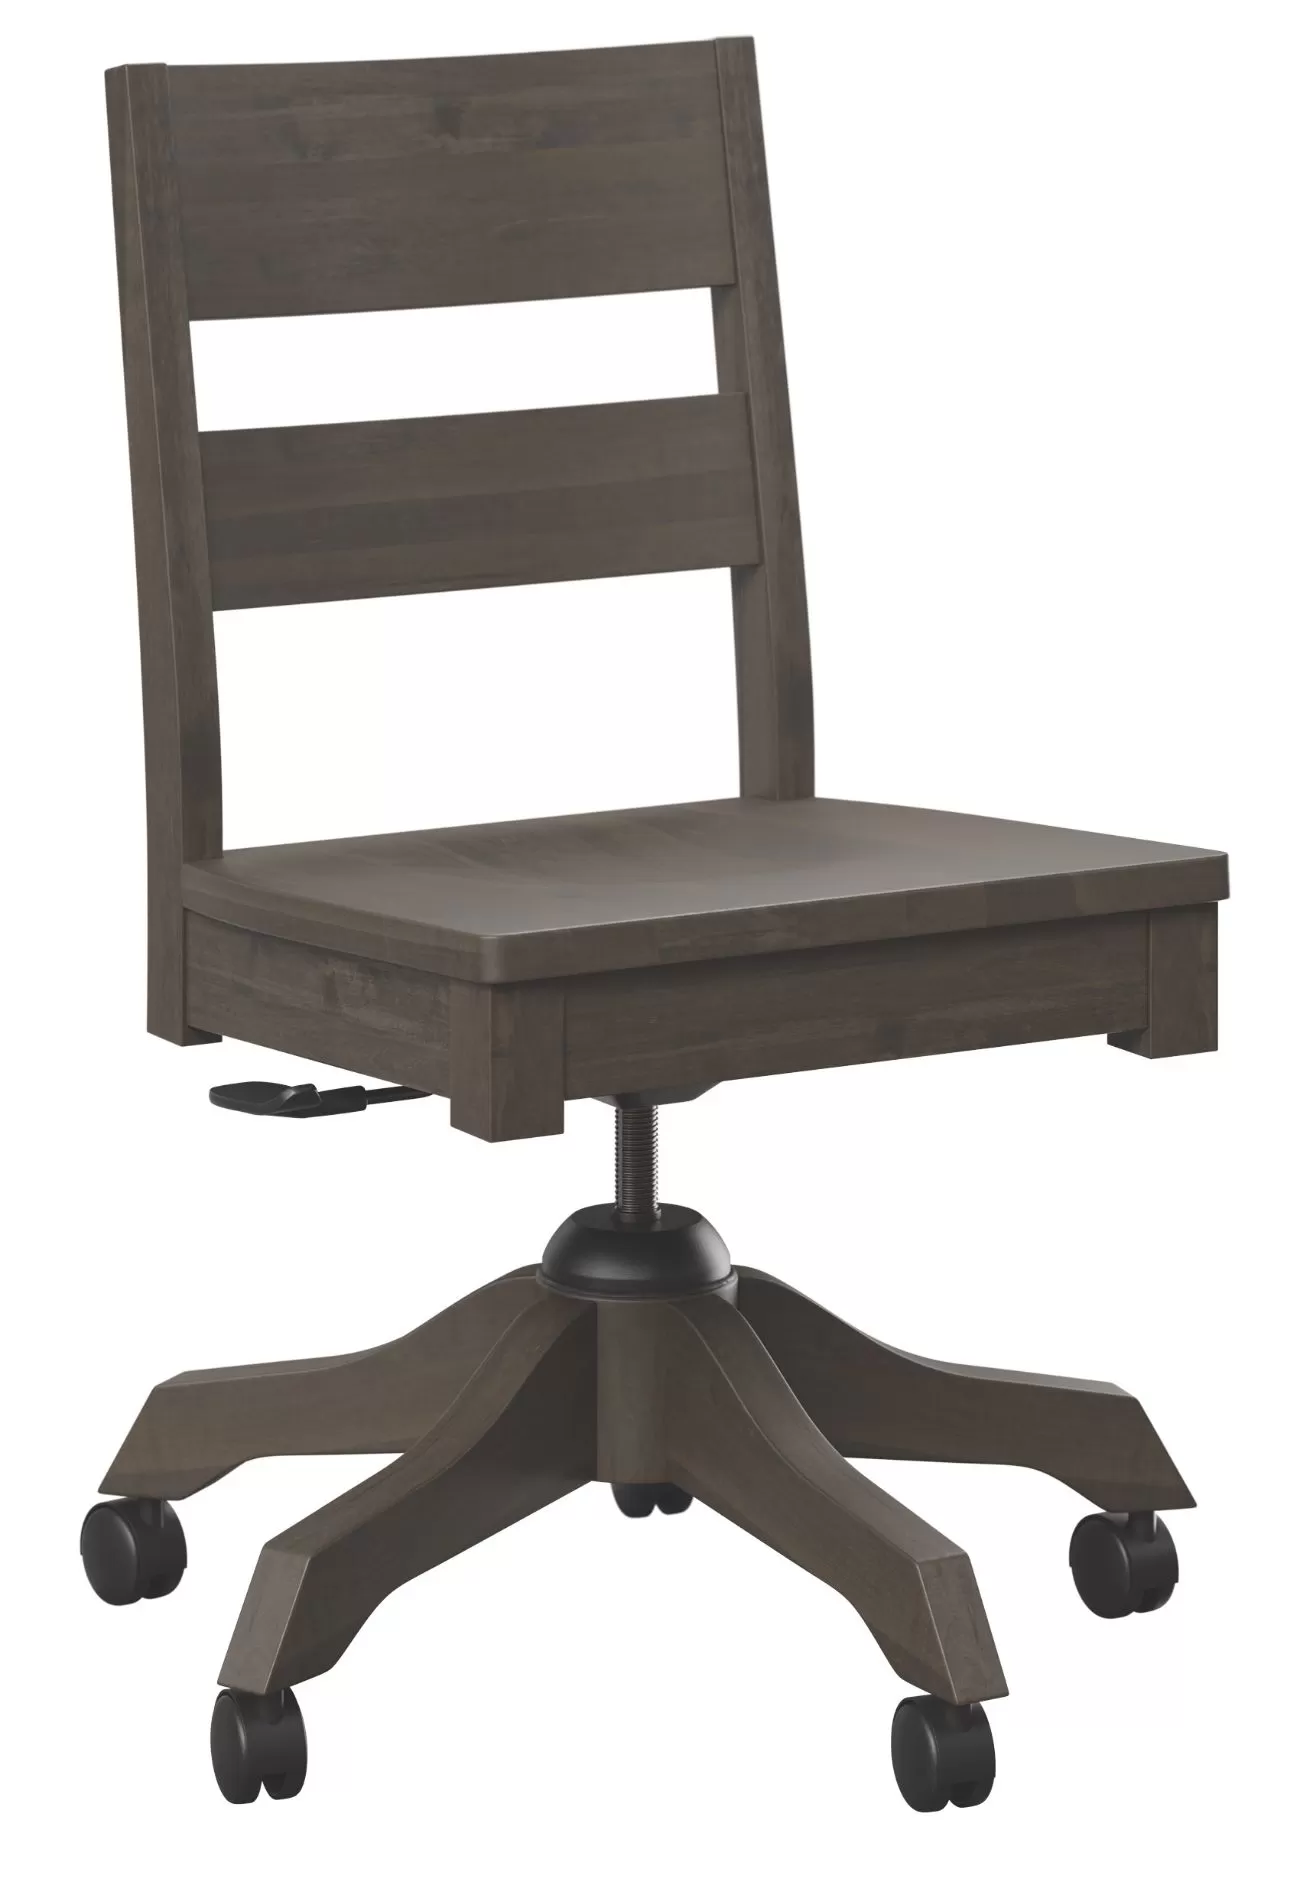 Avon side desk chair